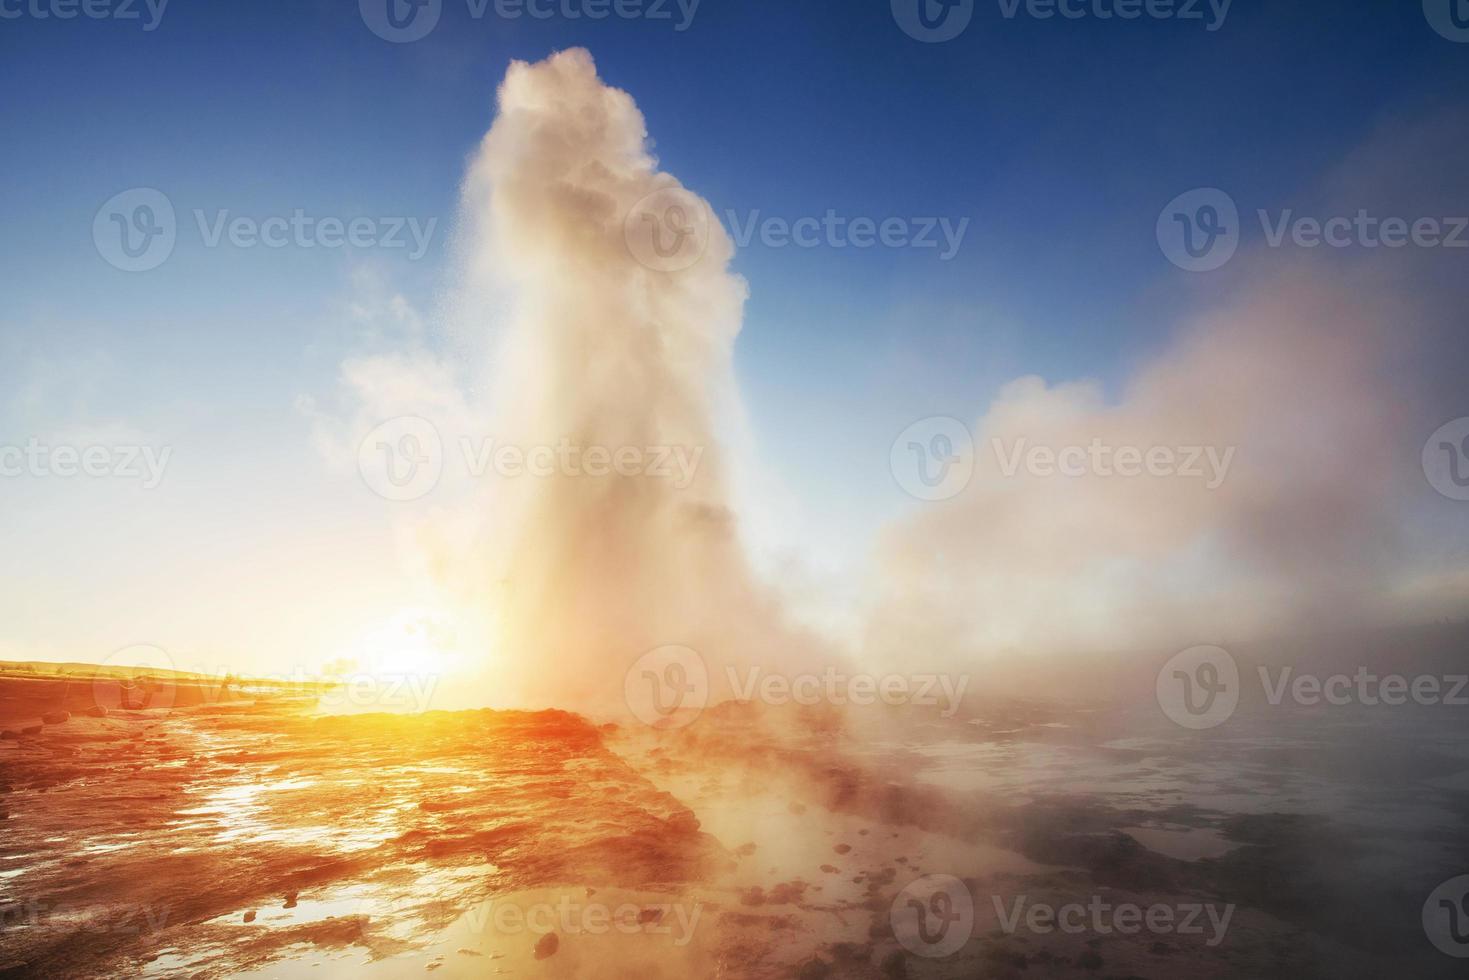 geysers en islande. fantastique kolory.turysty regarder la beauté de photo